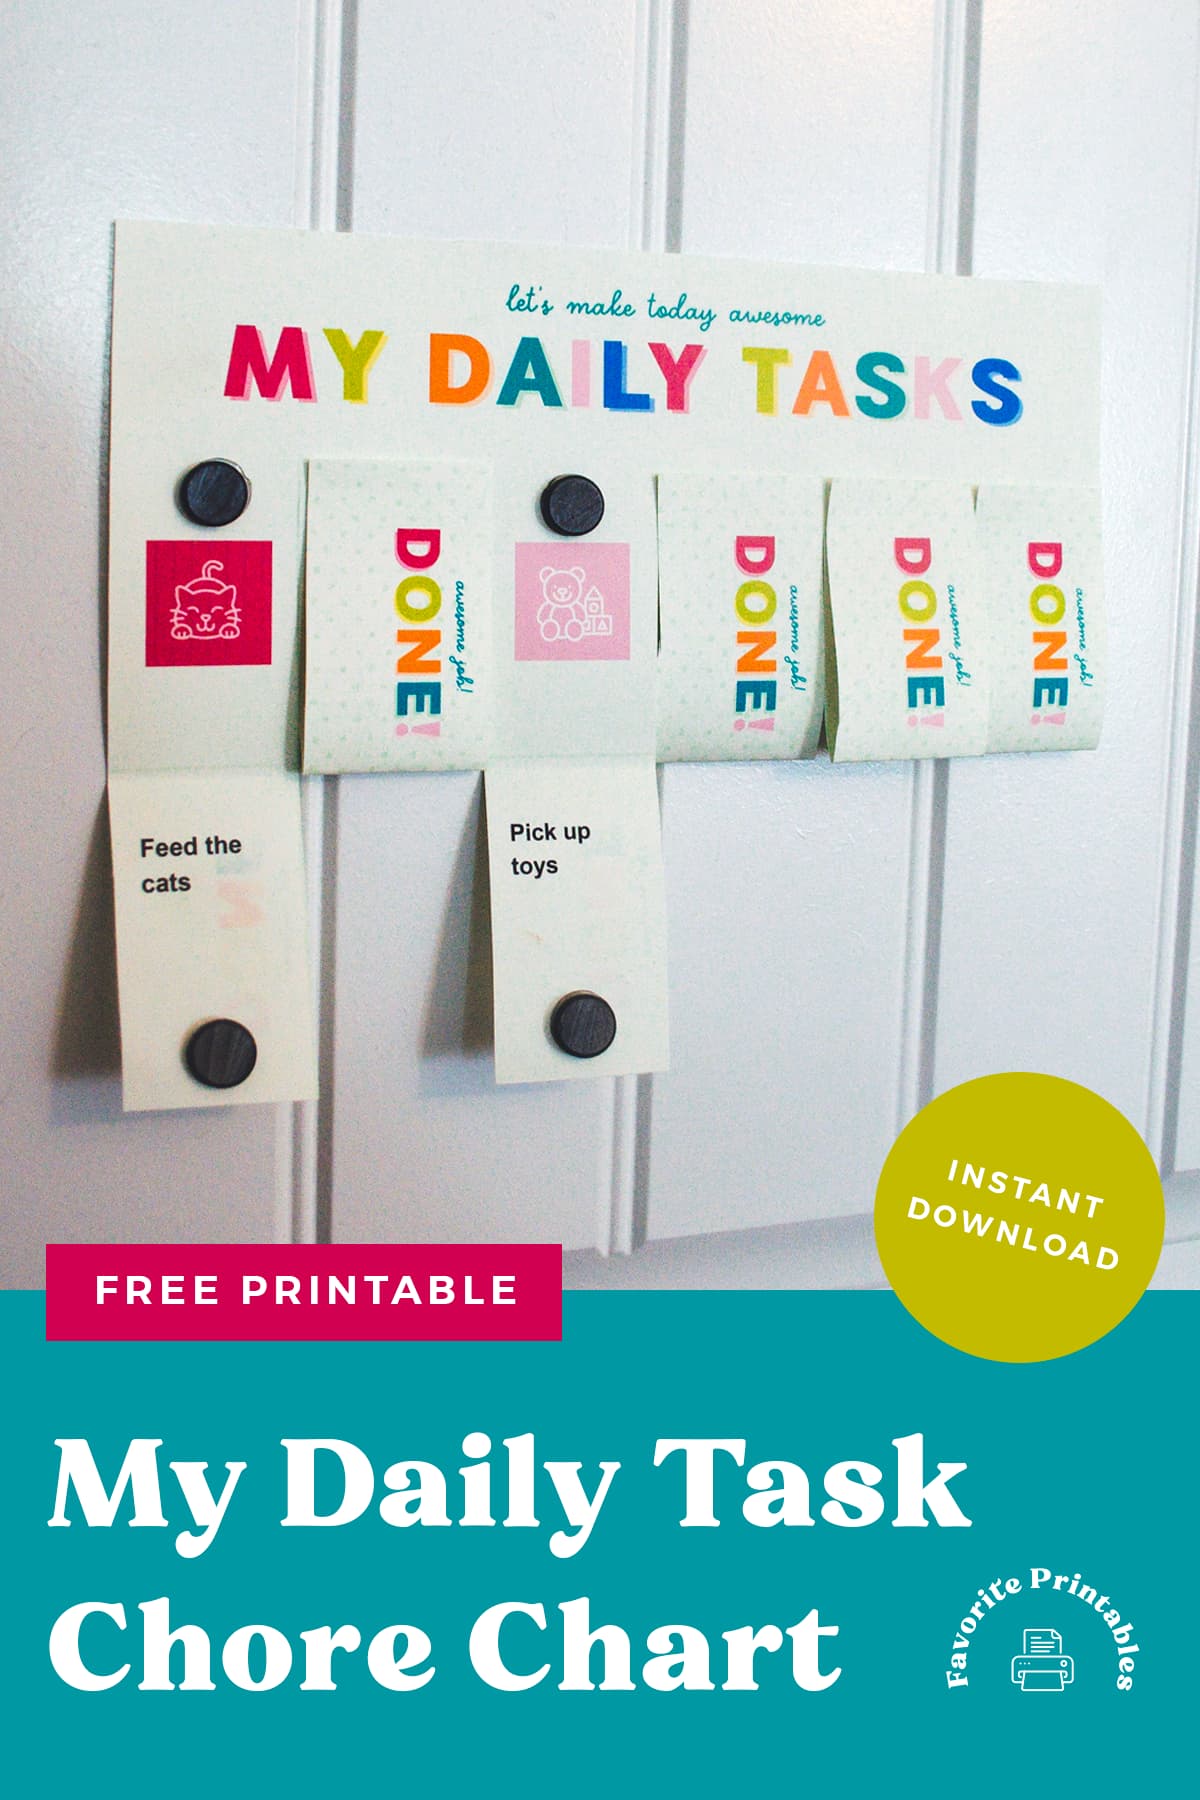 Free printable daily task chart pin.